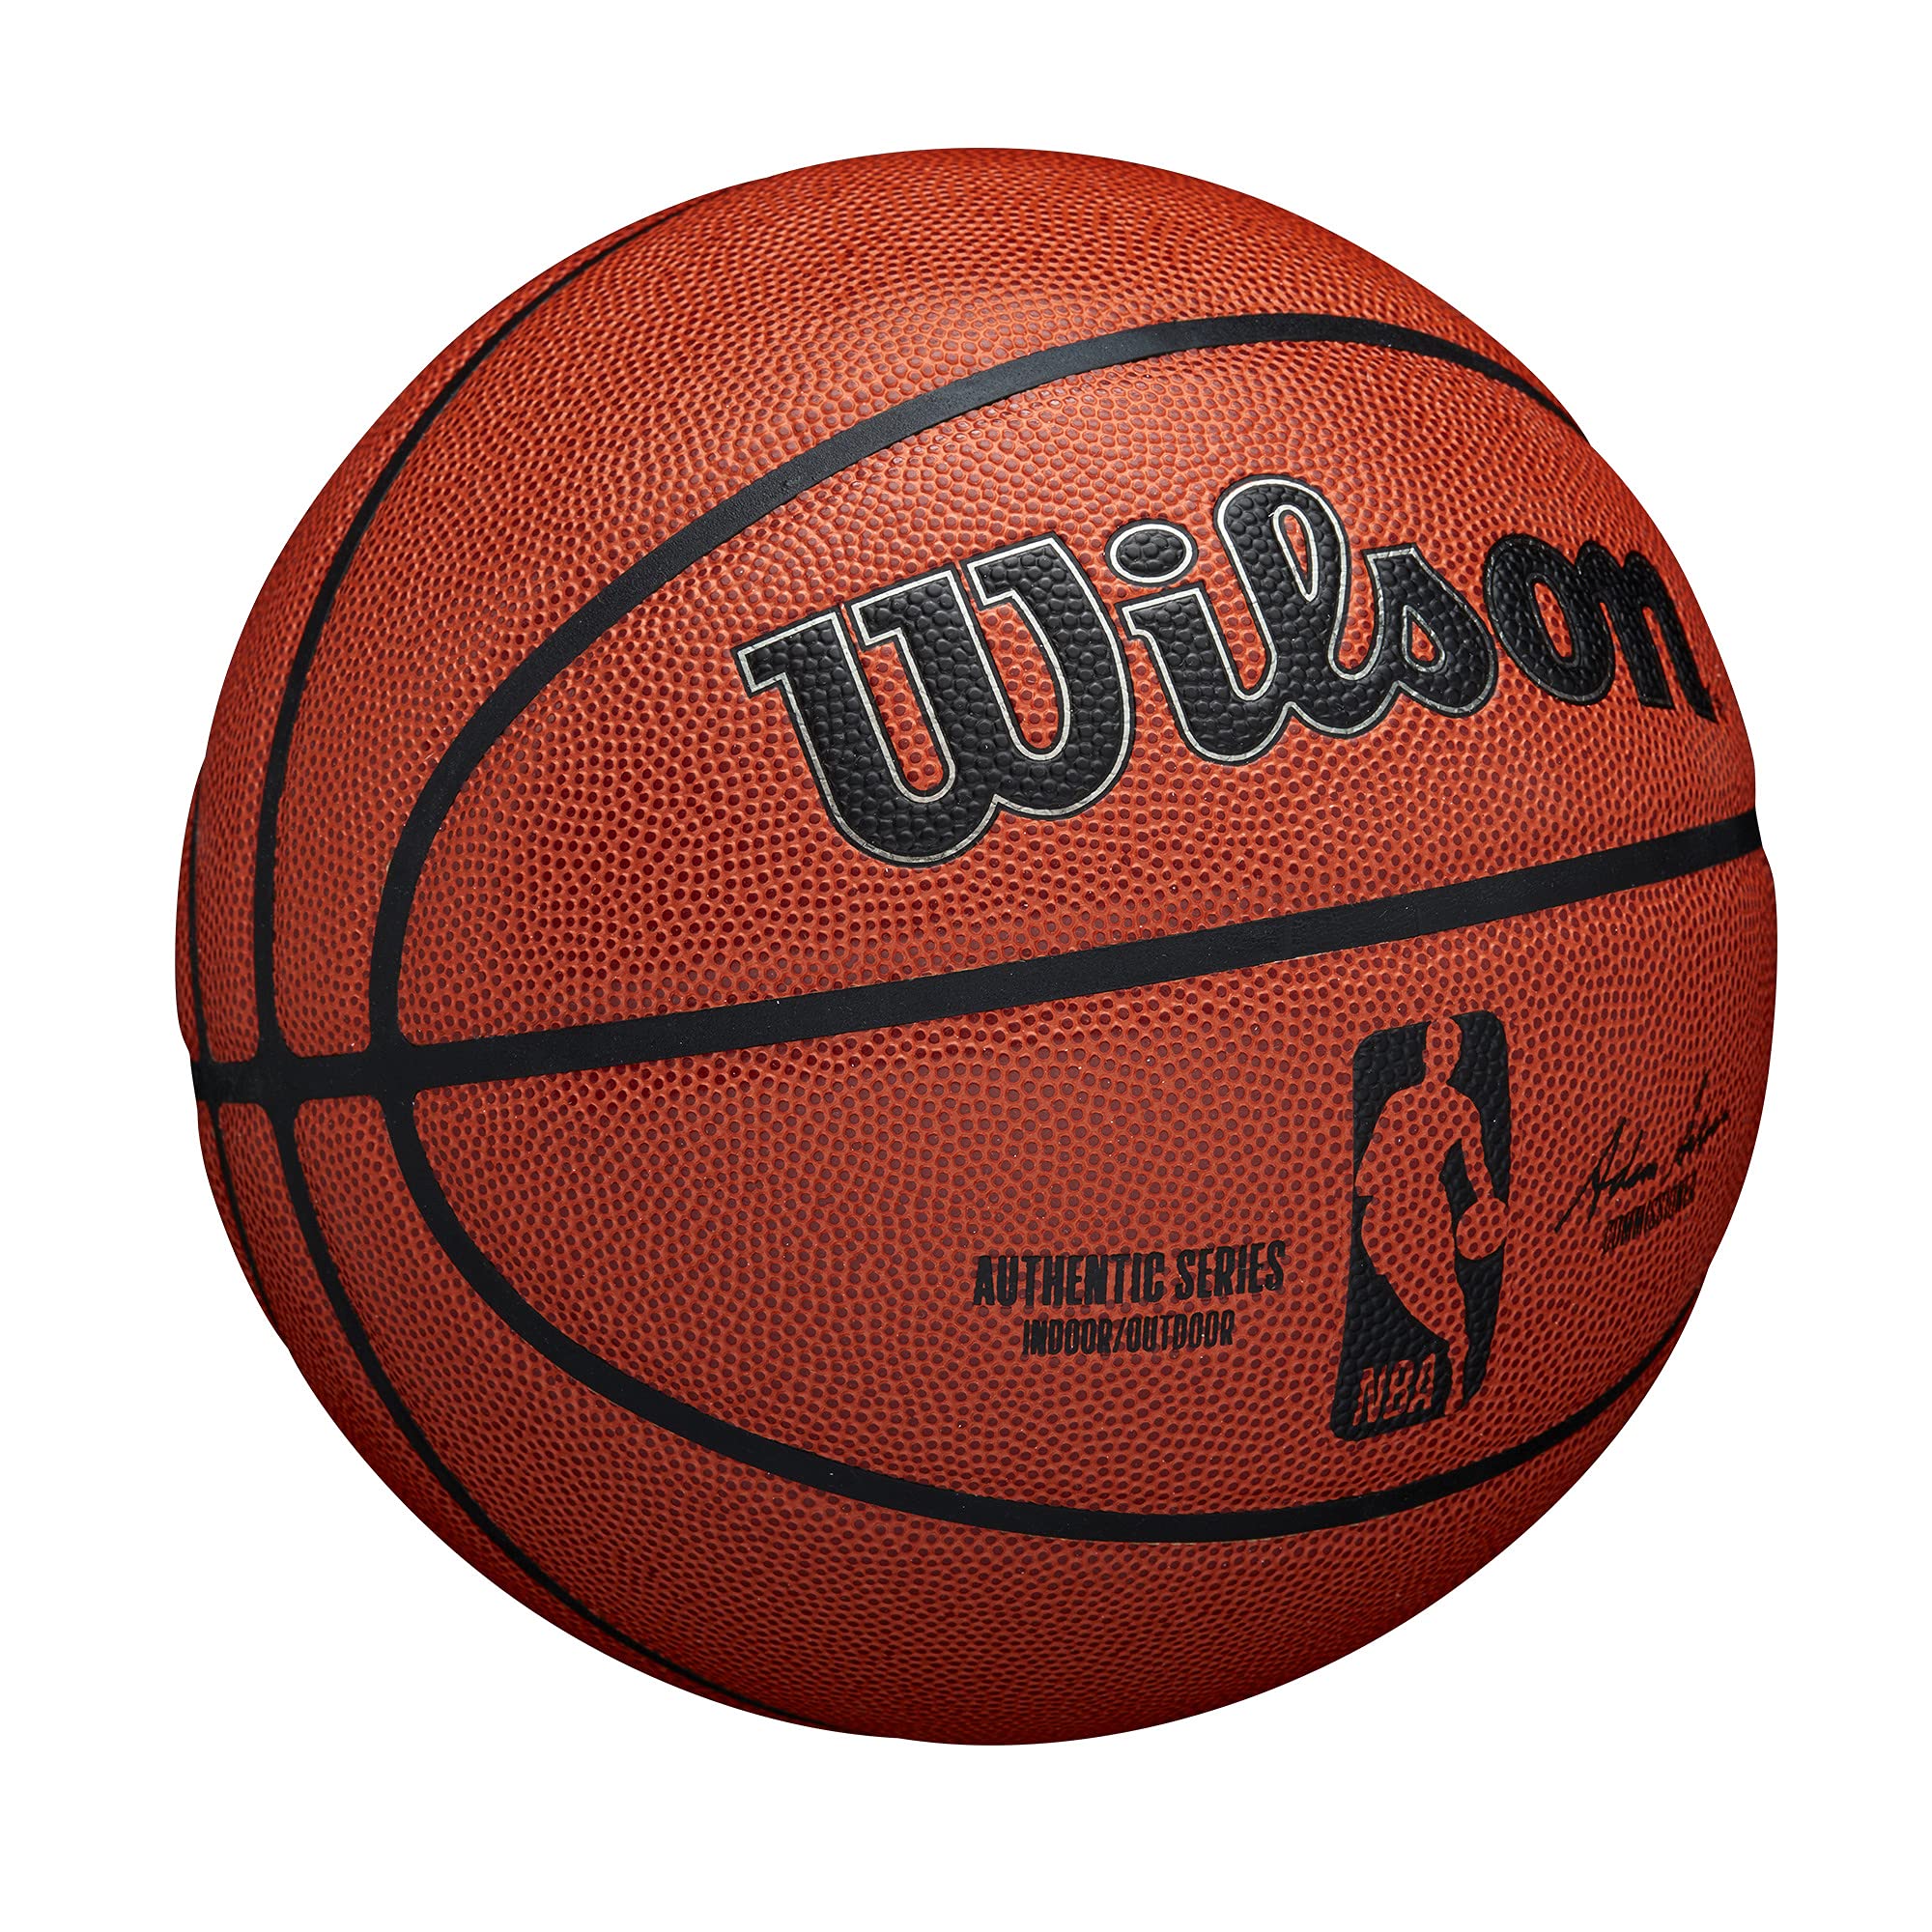 WILSON NBA Authentic Series Basketballs